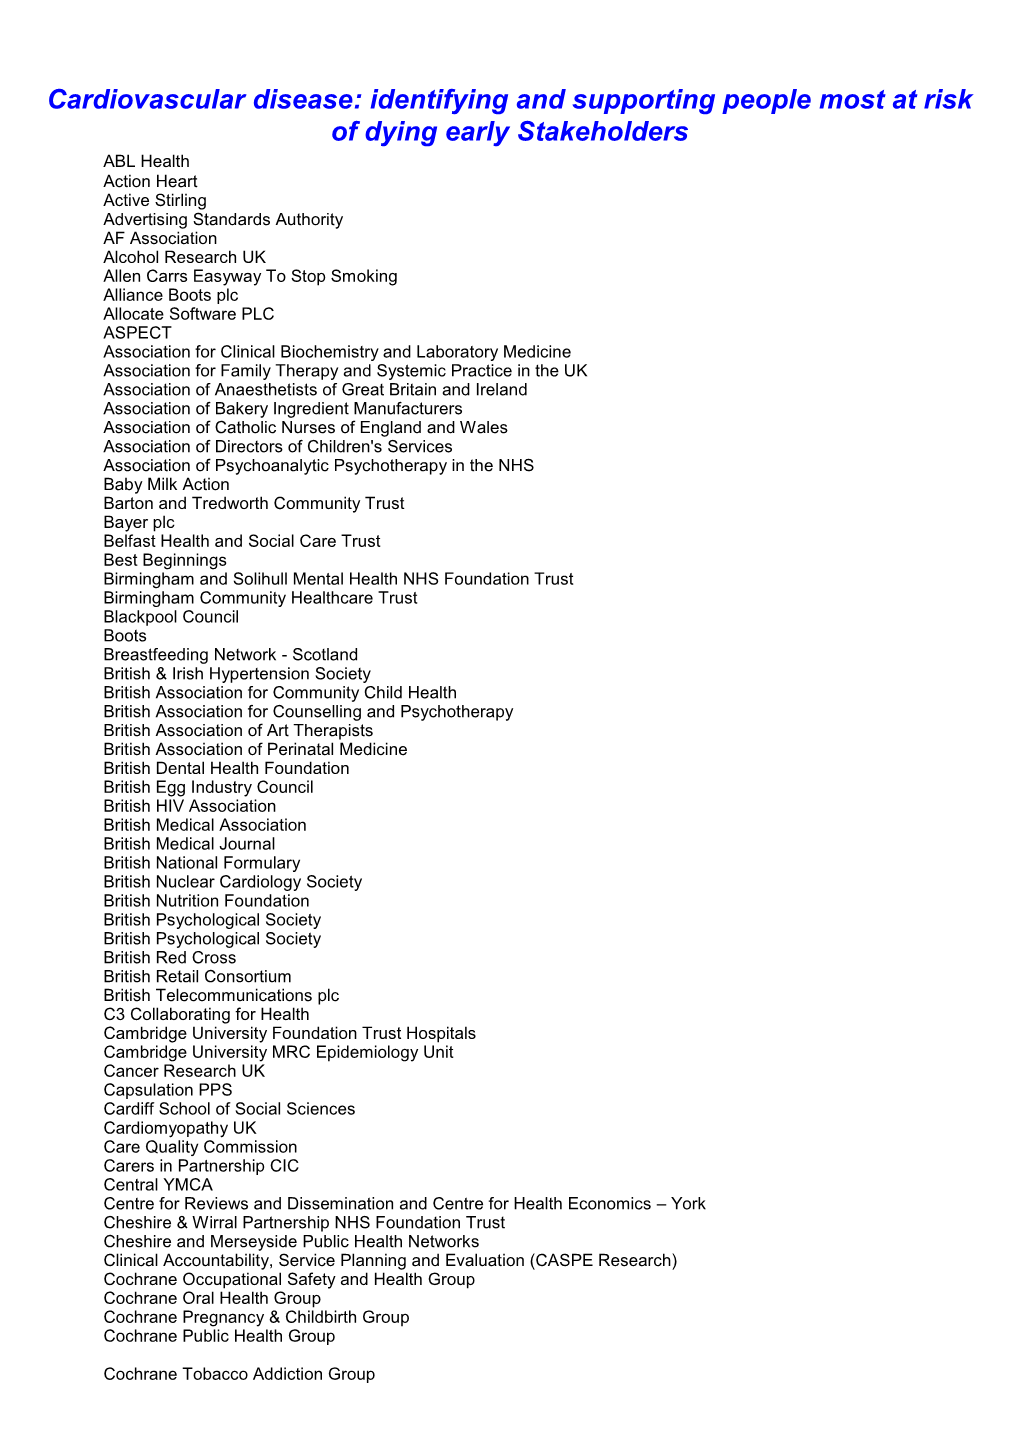 Stakeholder List PDF 160 KB